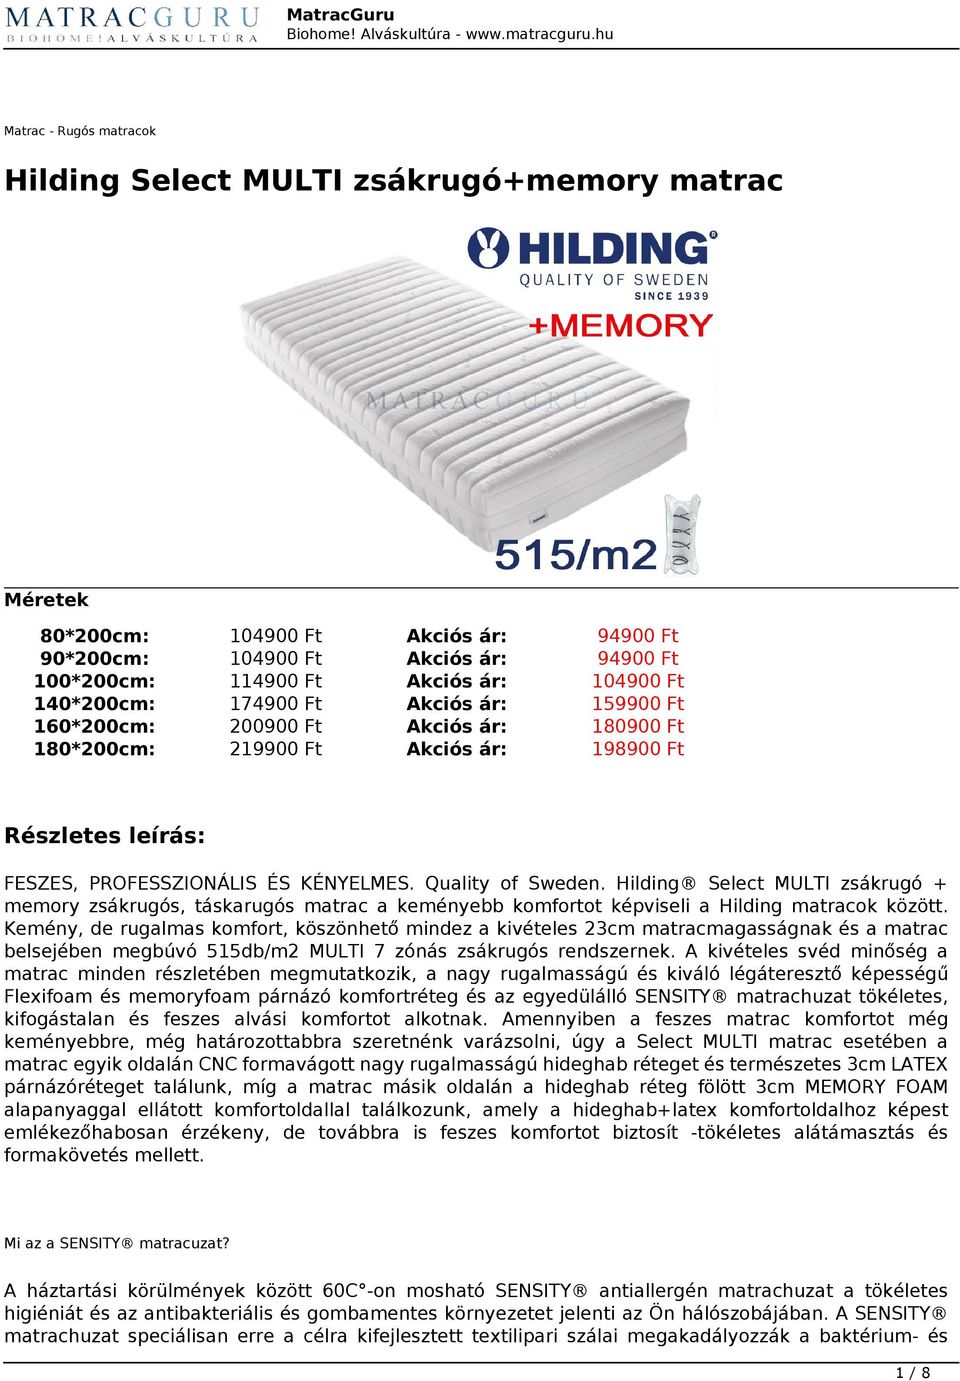 Hilding Select MULTI zsákrugó+memory matrac - PDF Free Download